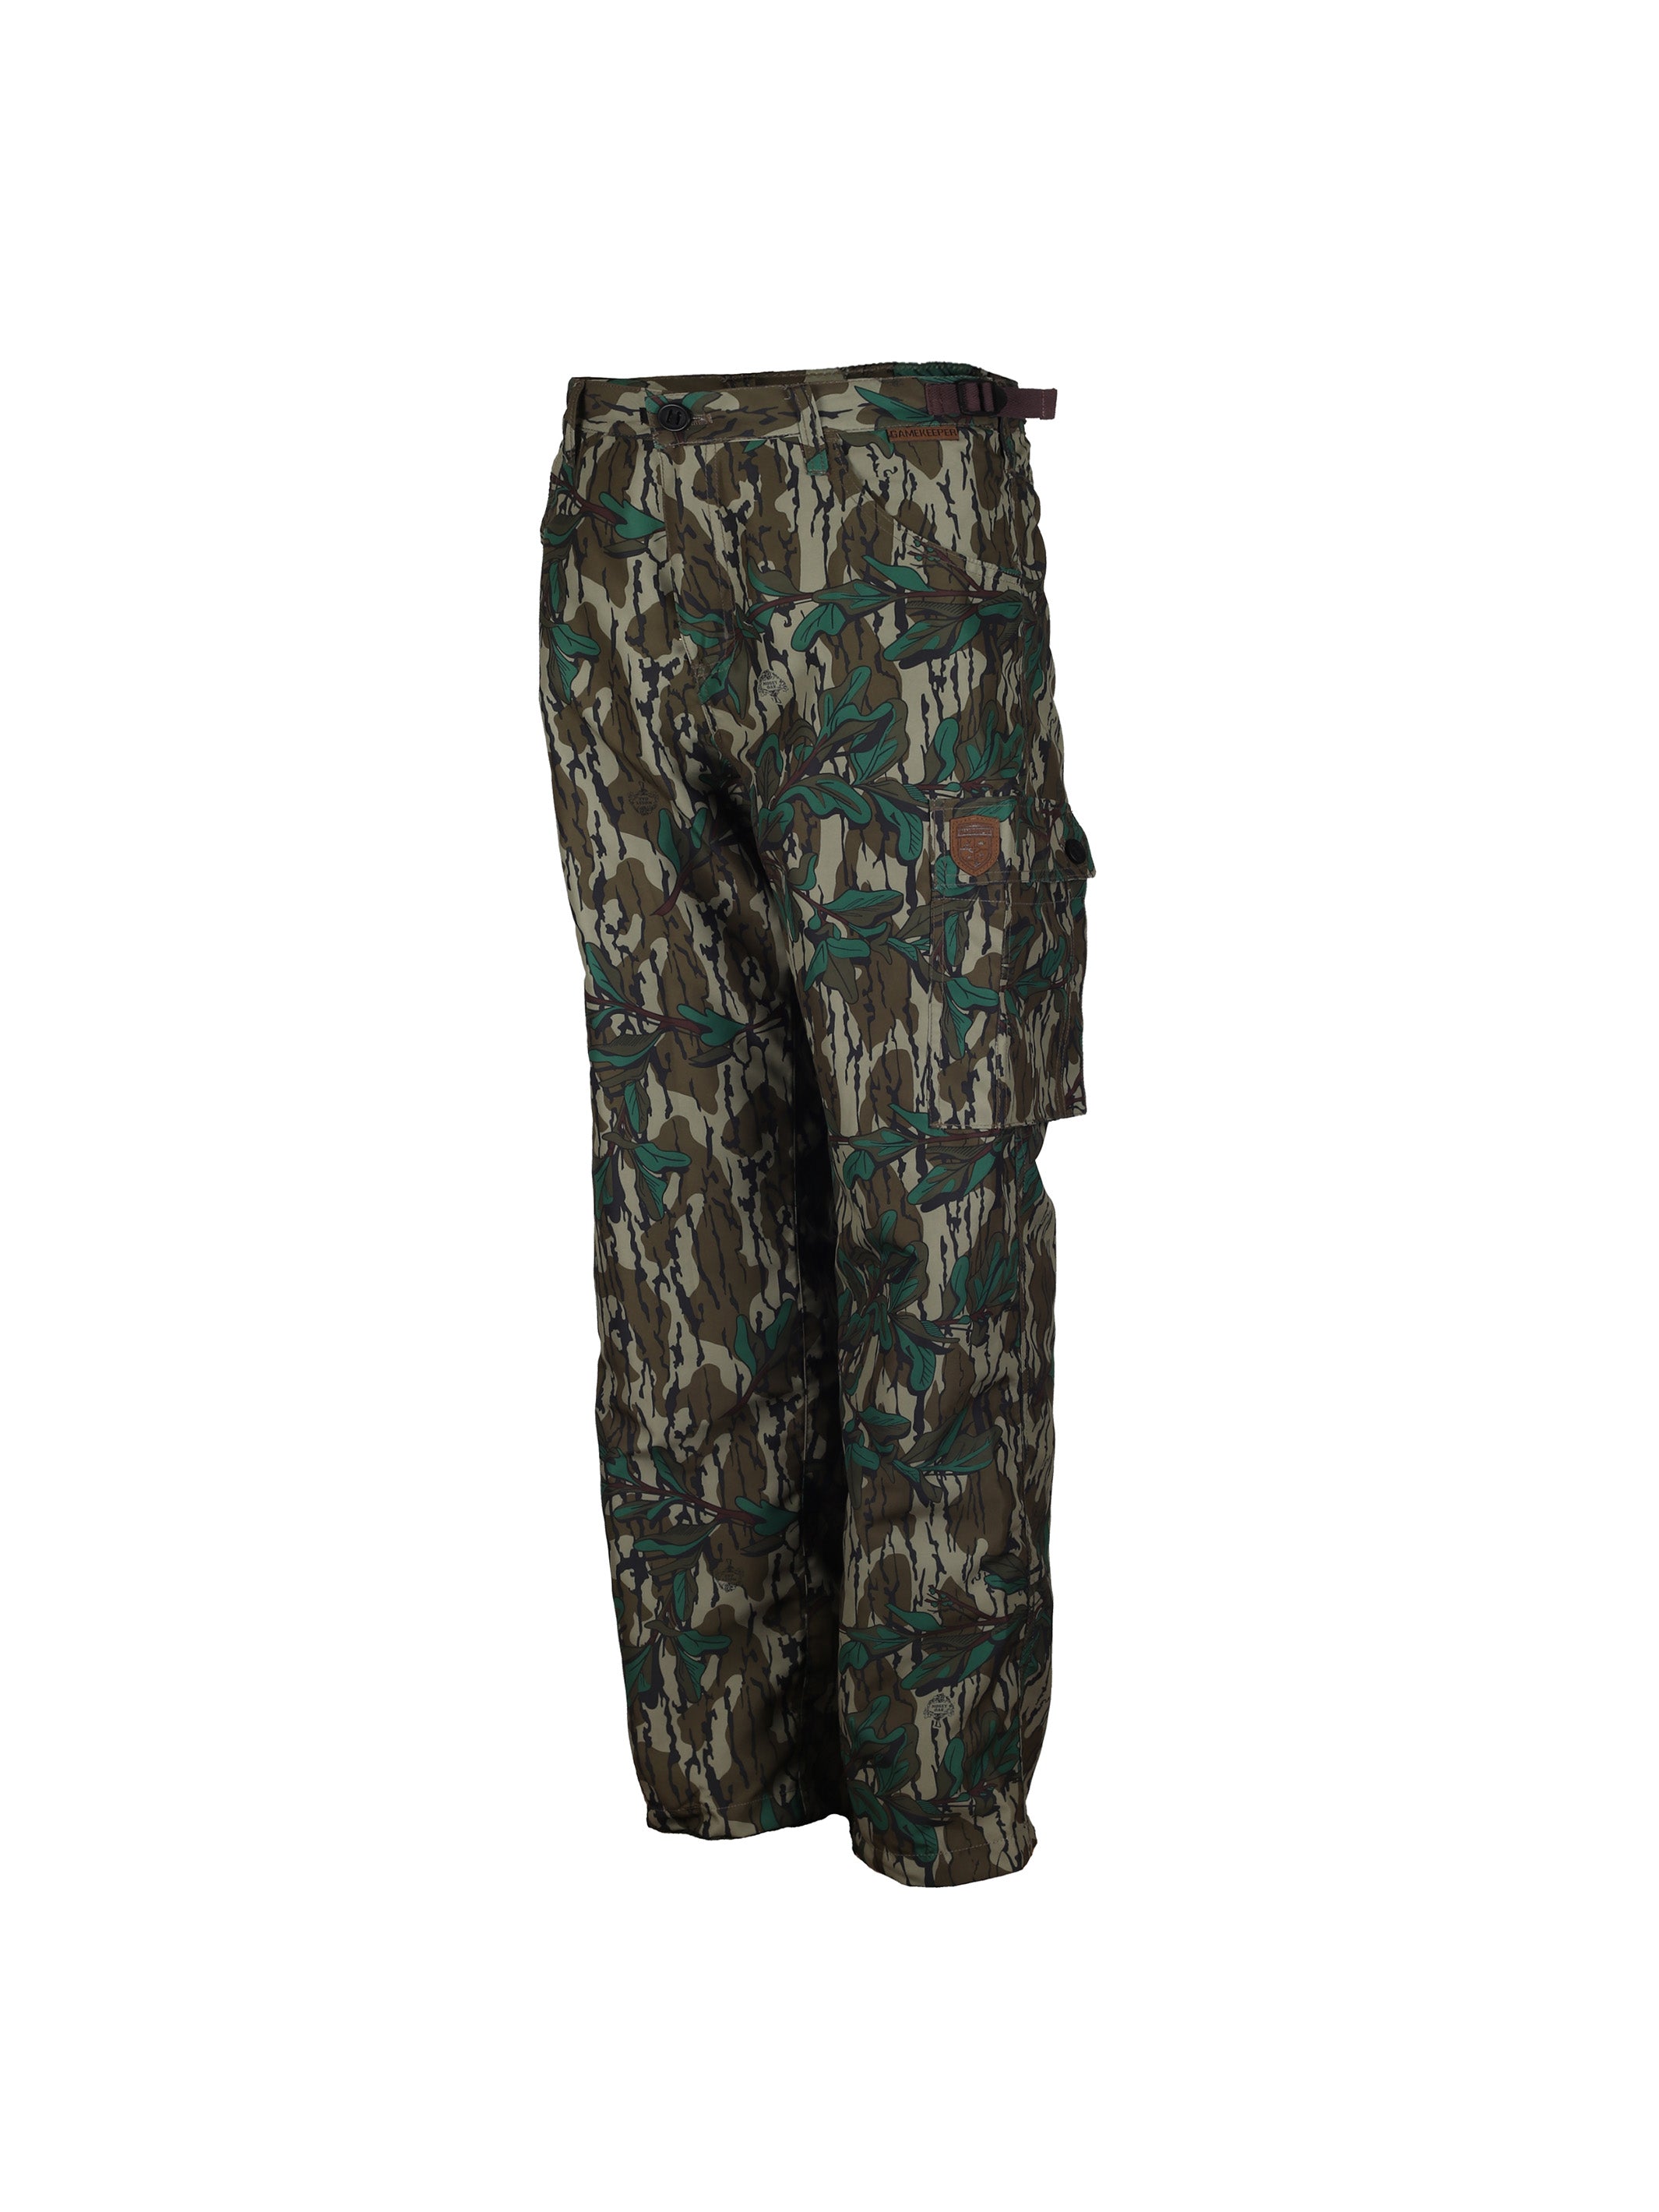 Drawstring Pants In Mossy Oak Camo Size XL, 57% OFF